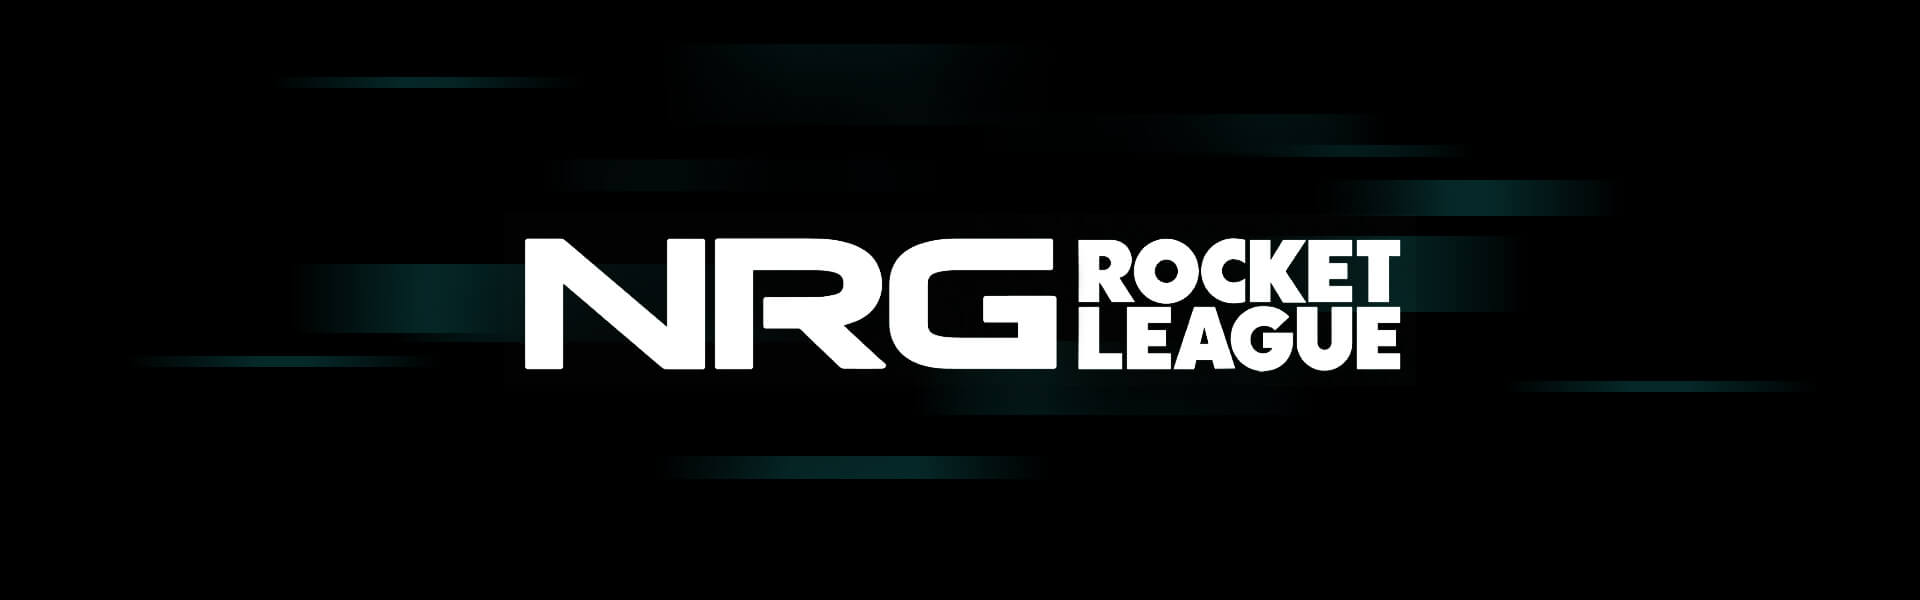 Baner zespołu NRG Rocket League